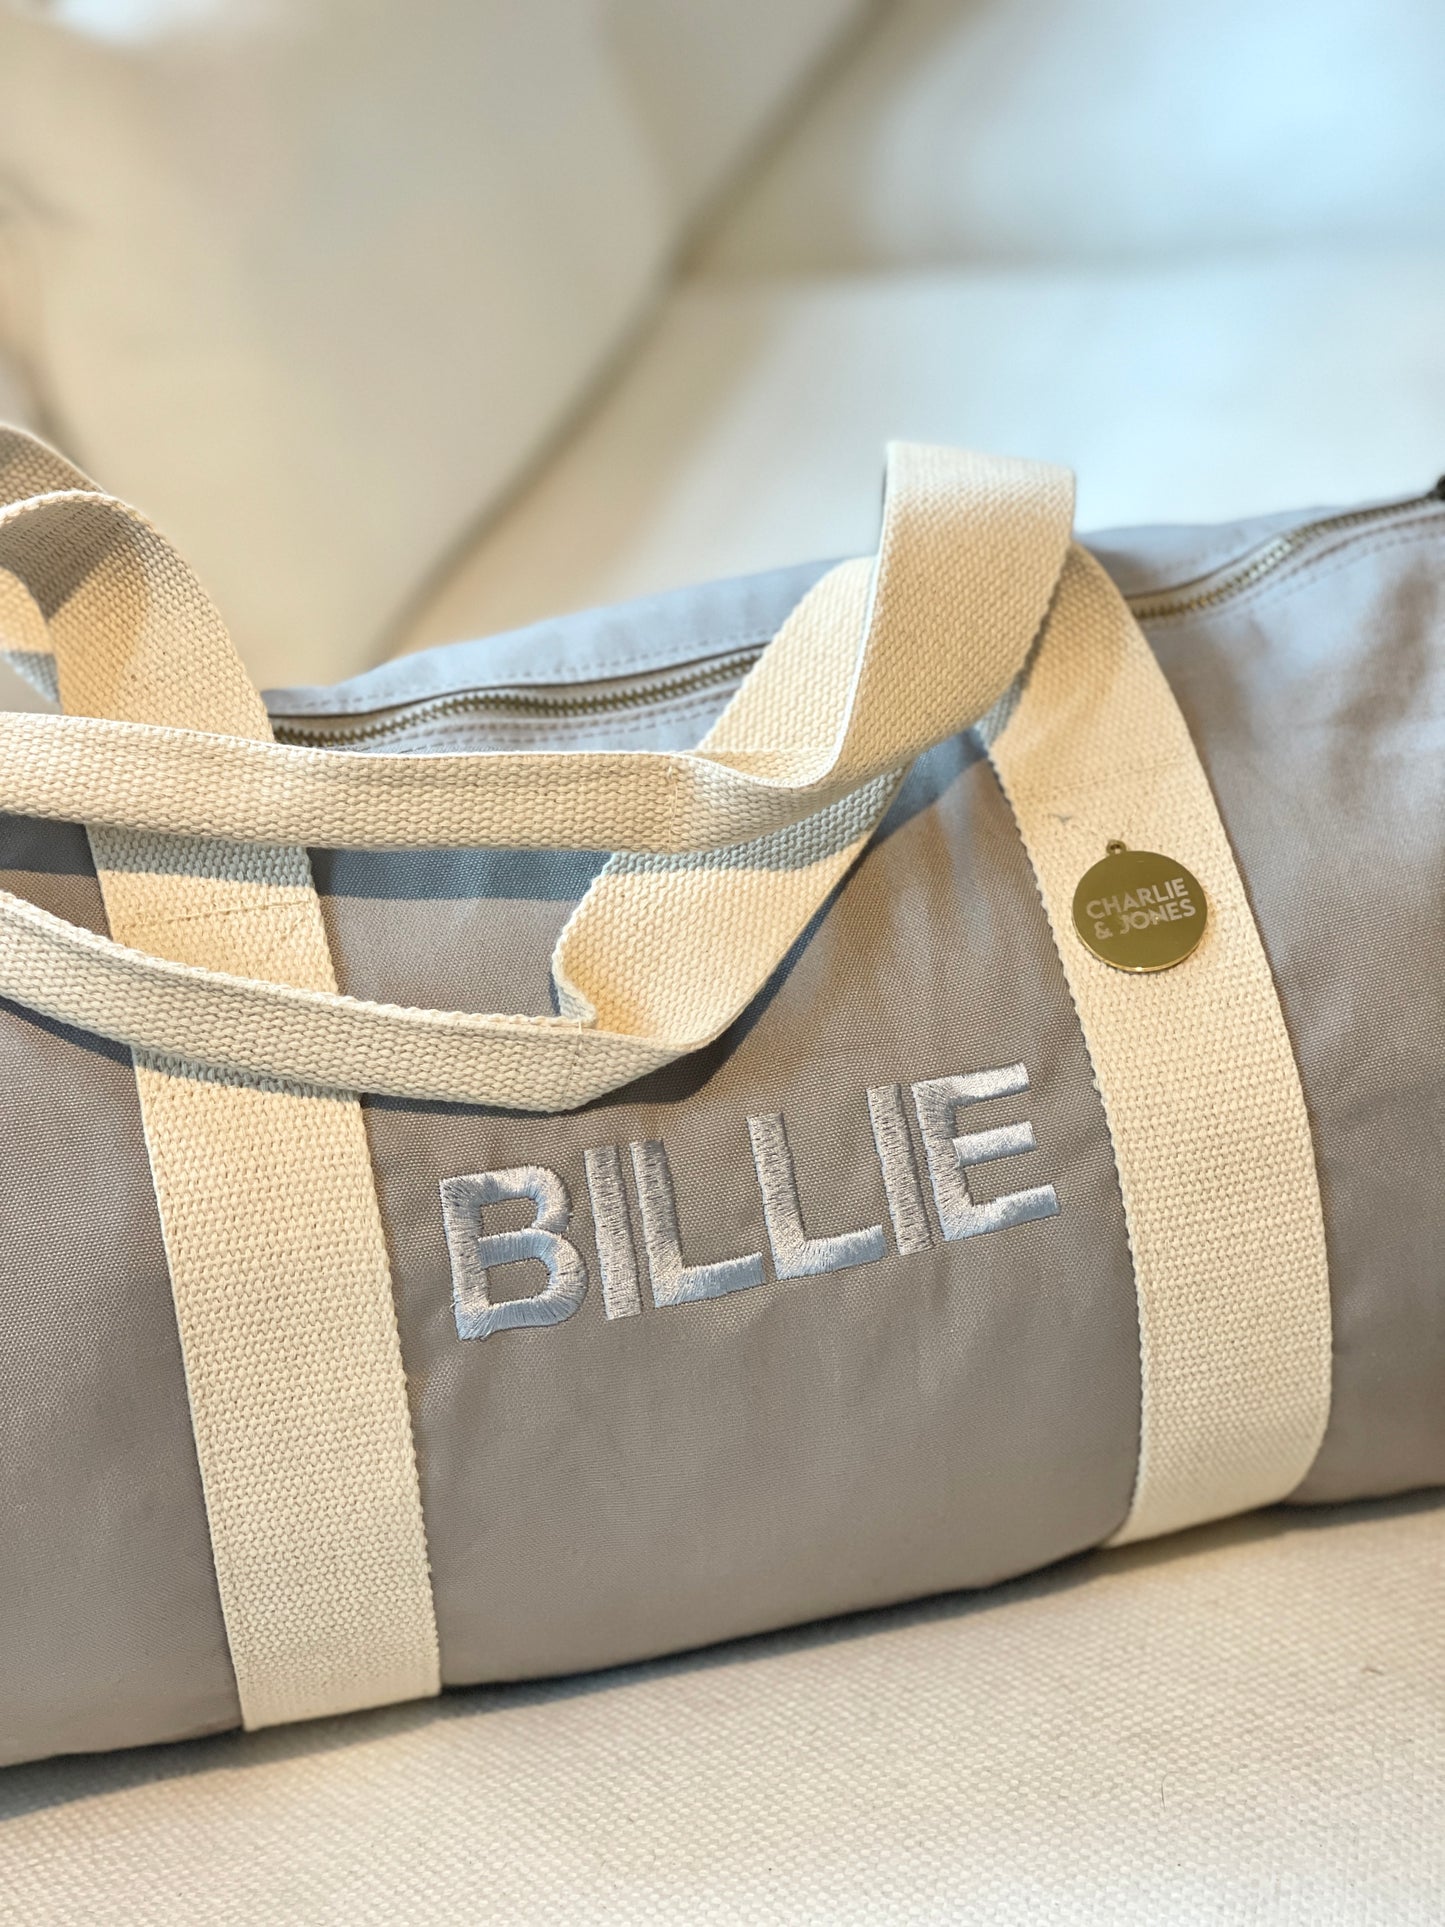 The Billie Bag Light Grey